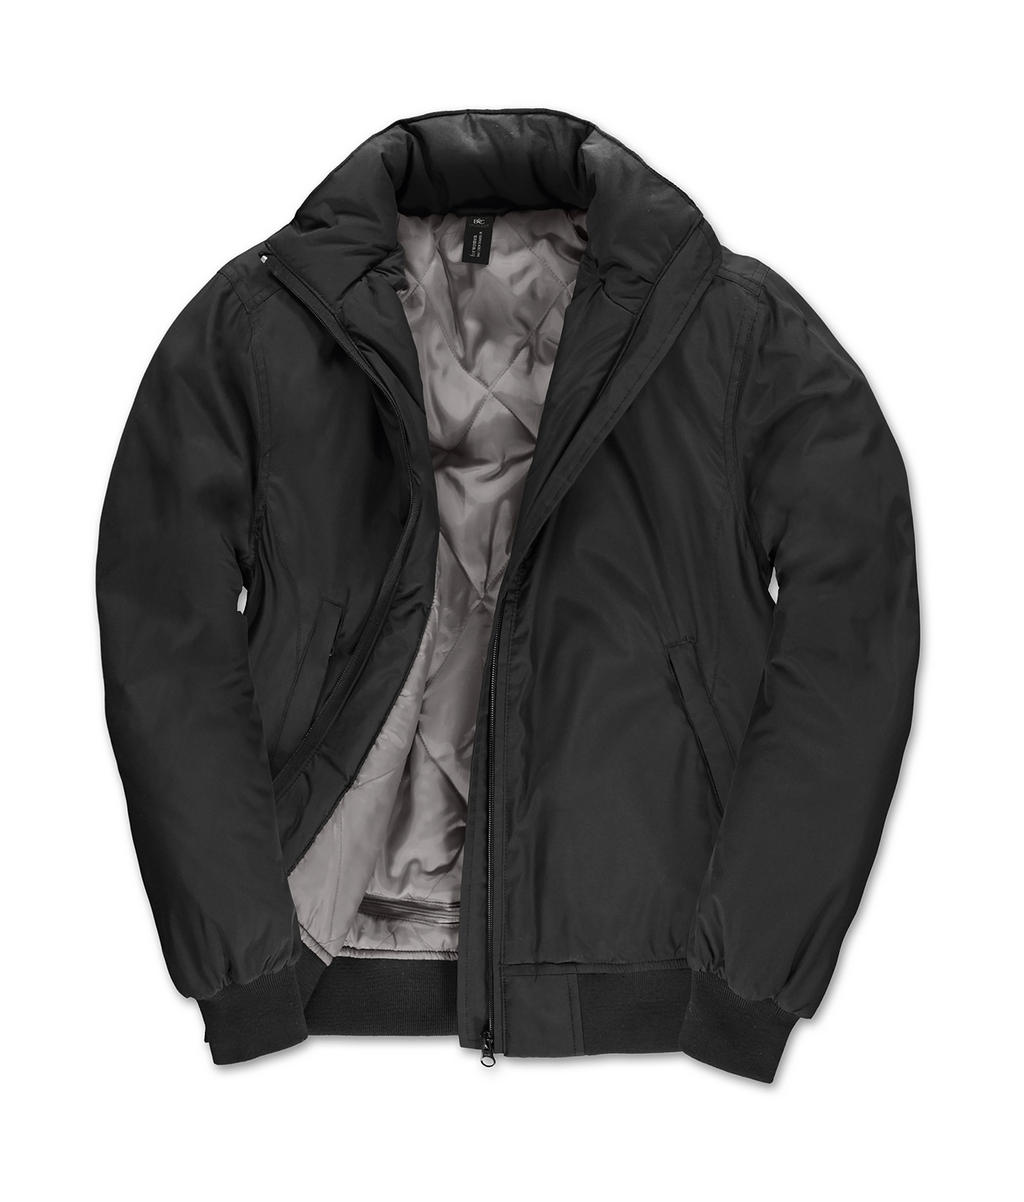  Crew Bomber/women Jacket in Farbe Black/Warm Grey